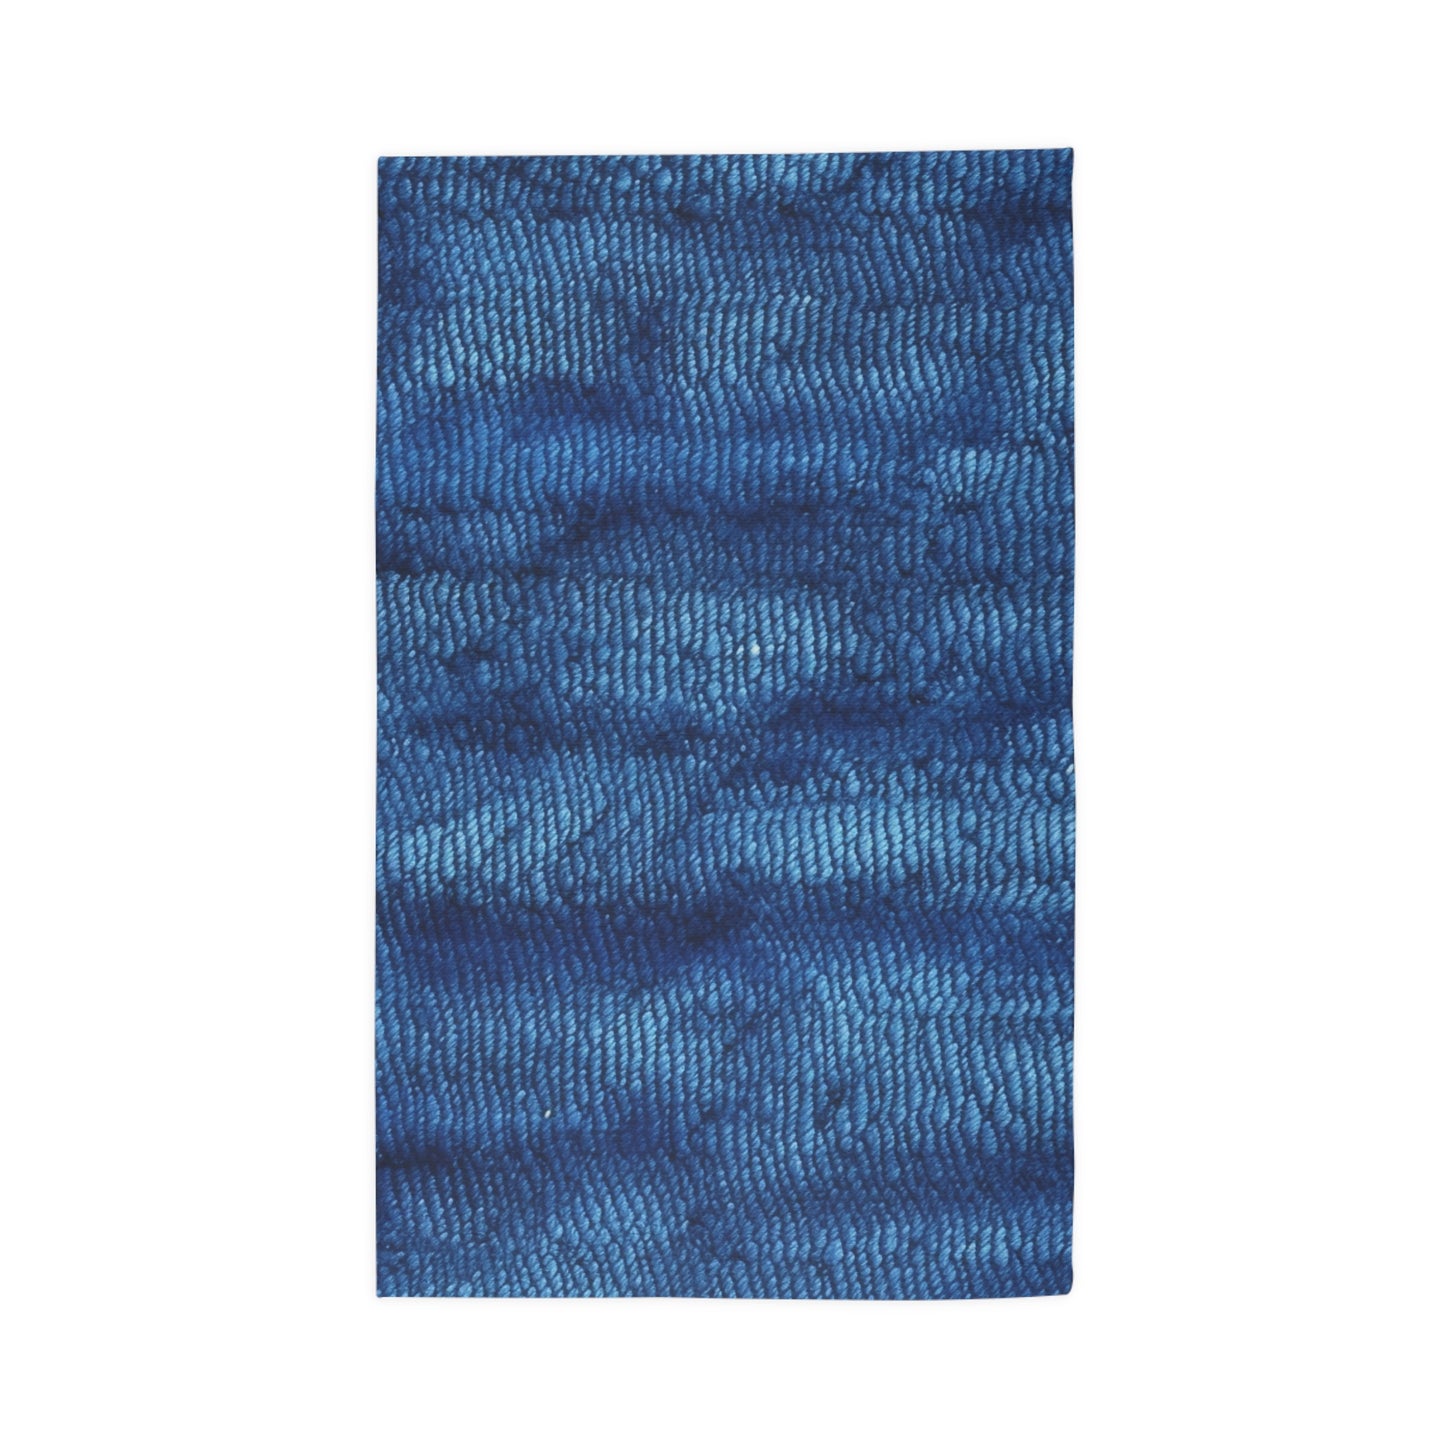 Blue Spectrum: Denim-Inspired Fabric Light to Dark - Dobby Rug